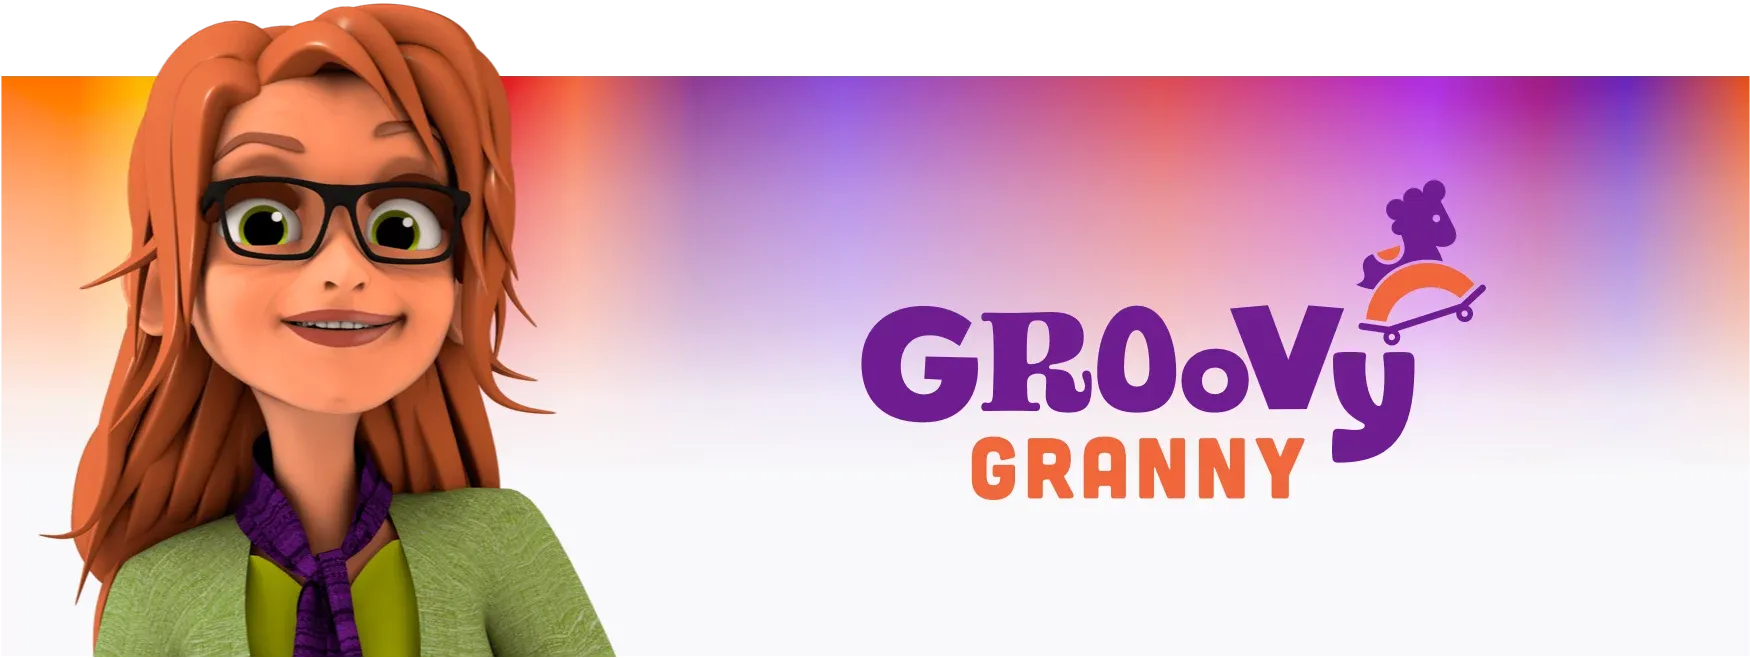 Groovy Granny Banner